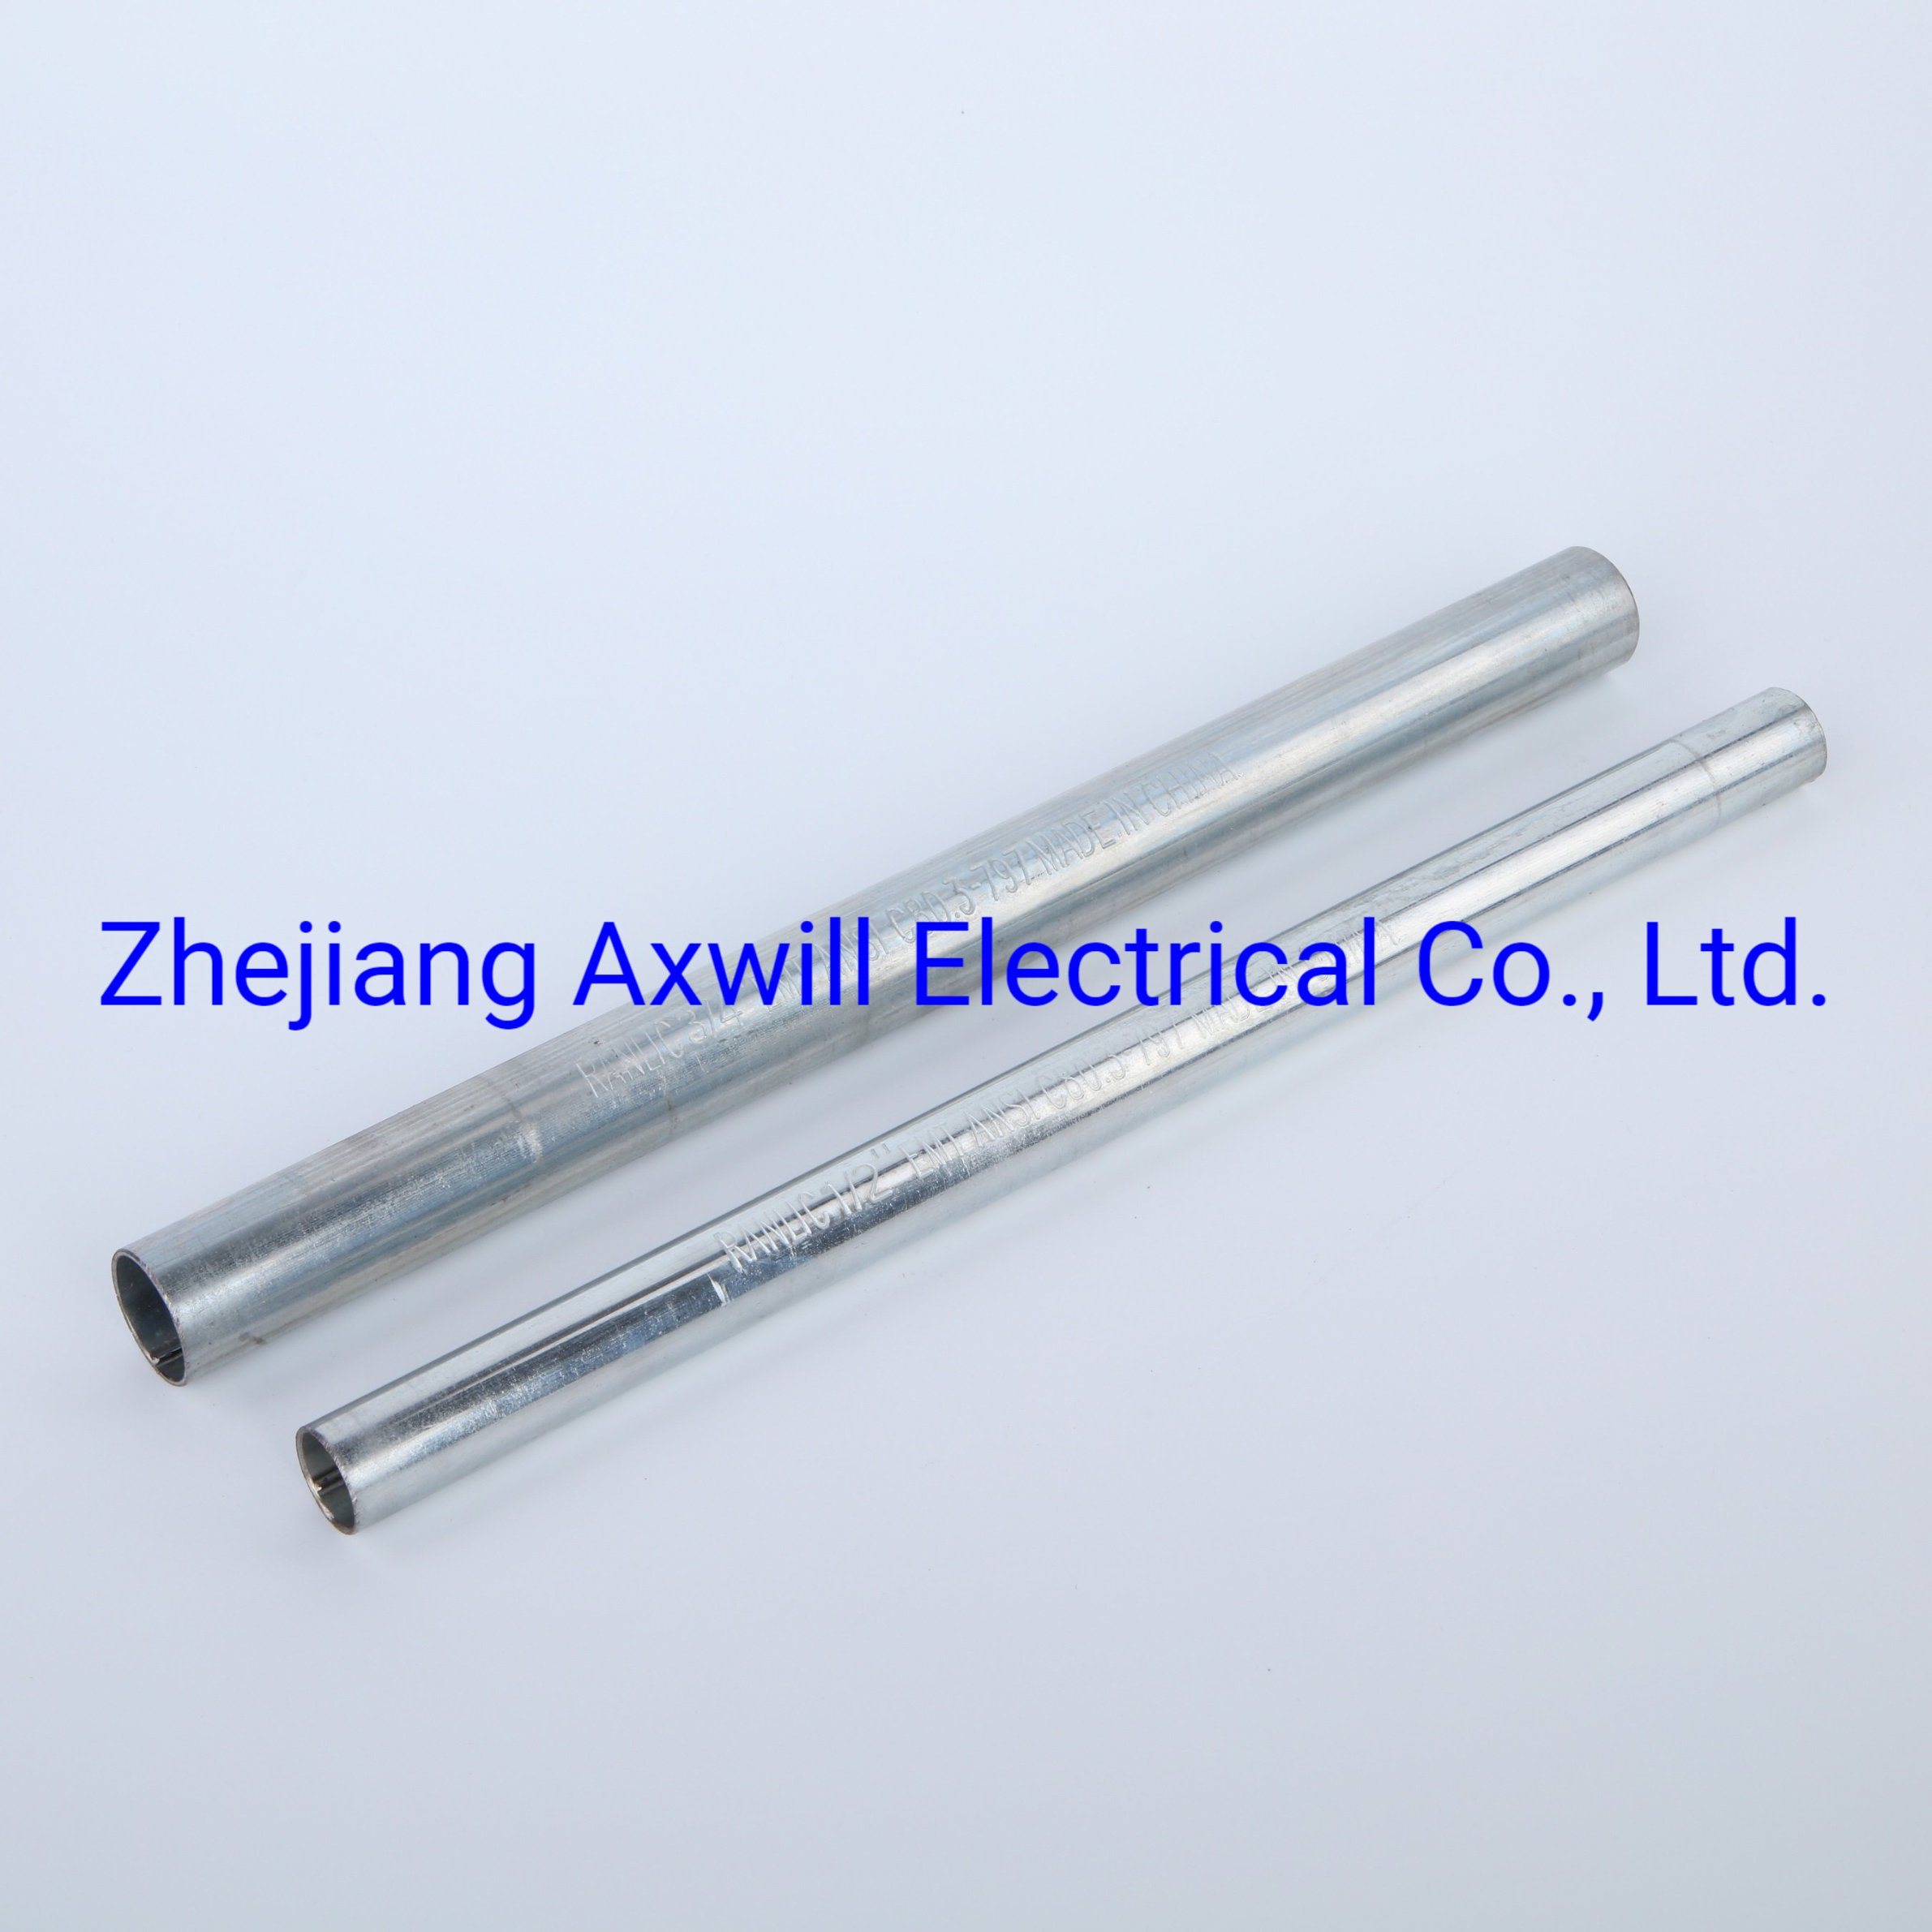 China Factory Price EMT Steel Hot DIP Galvanized Conduit